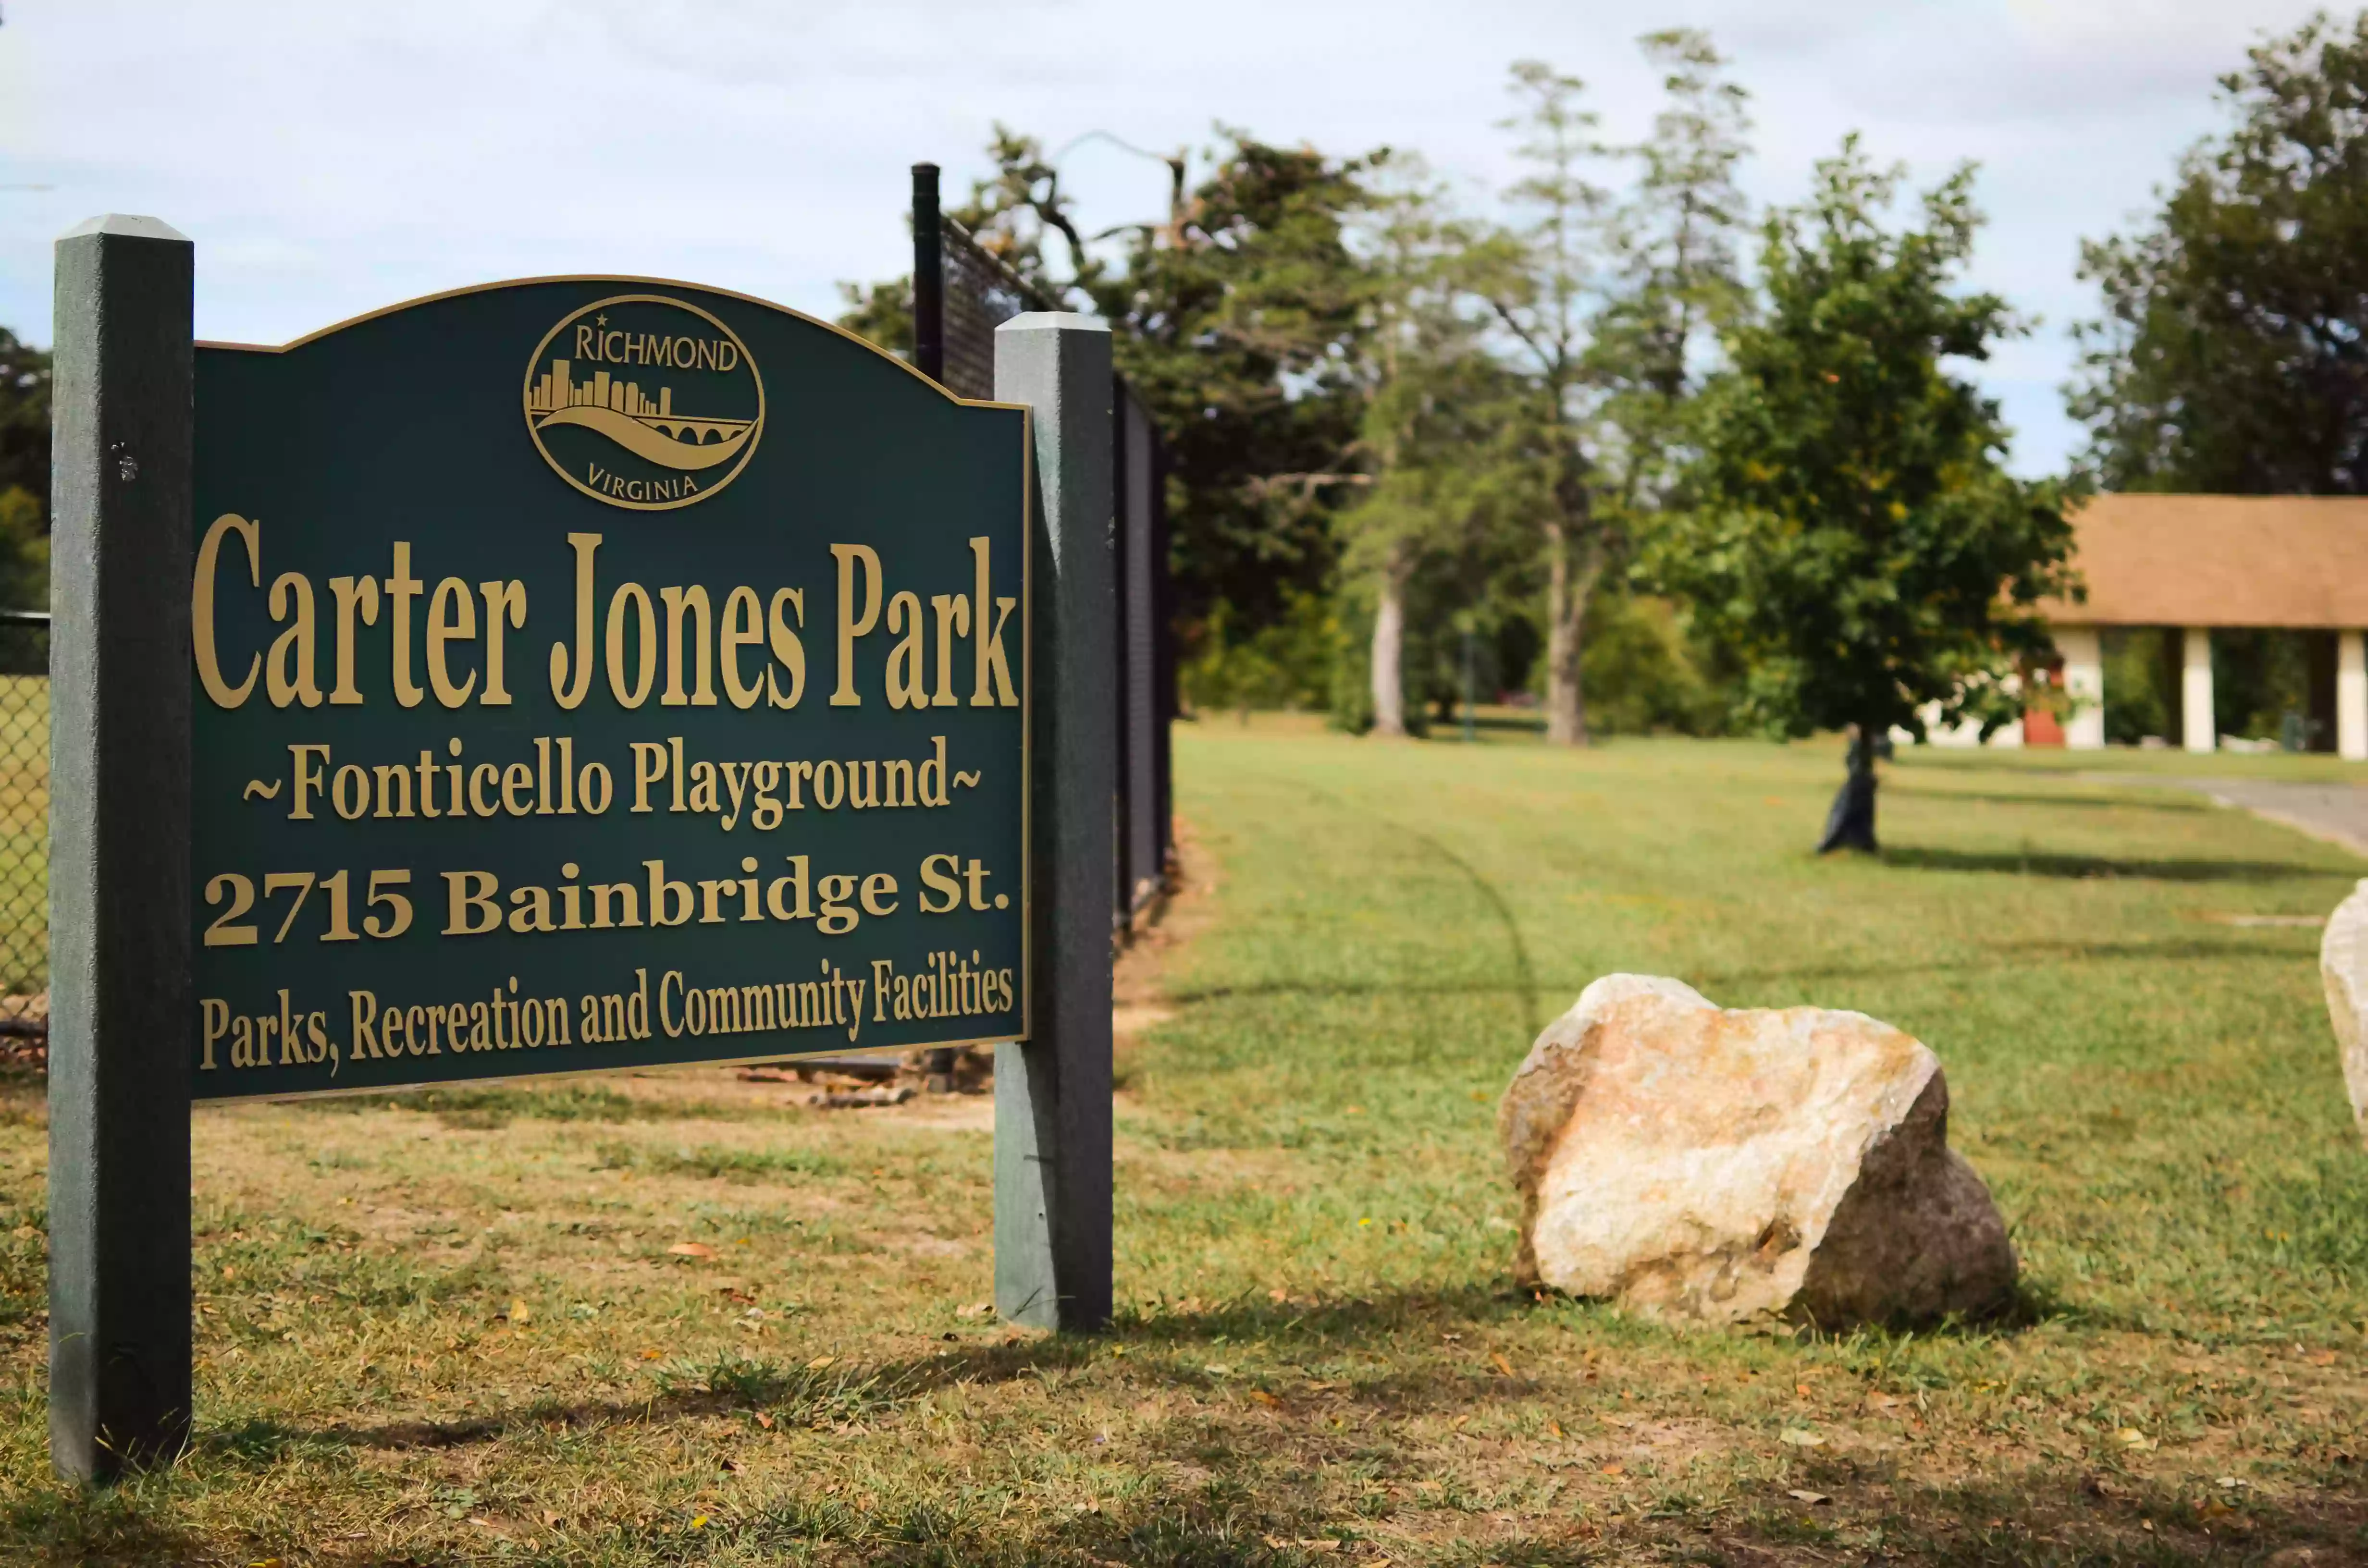 Carter Jones Park